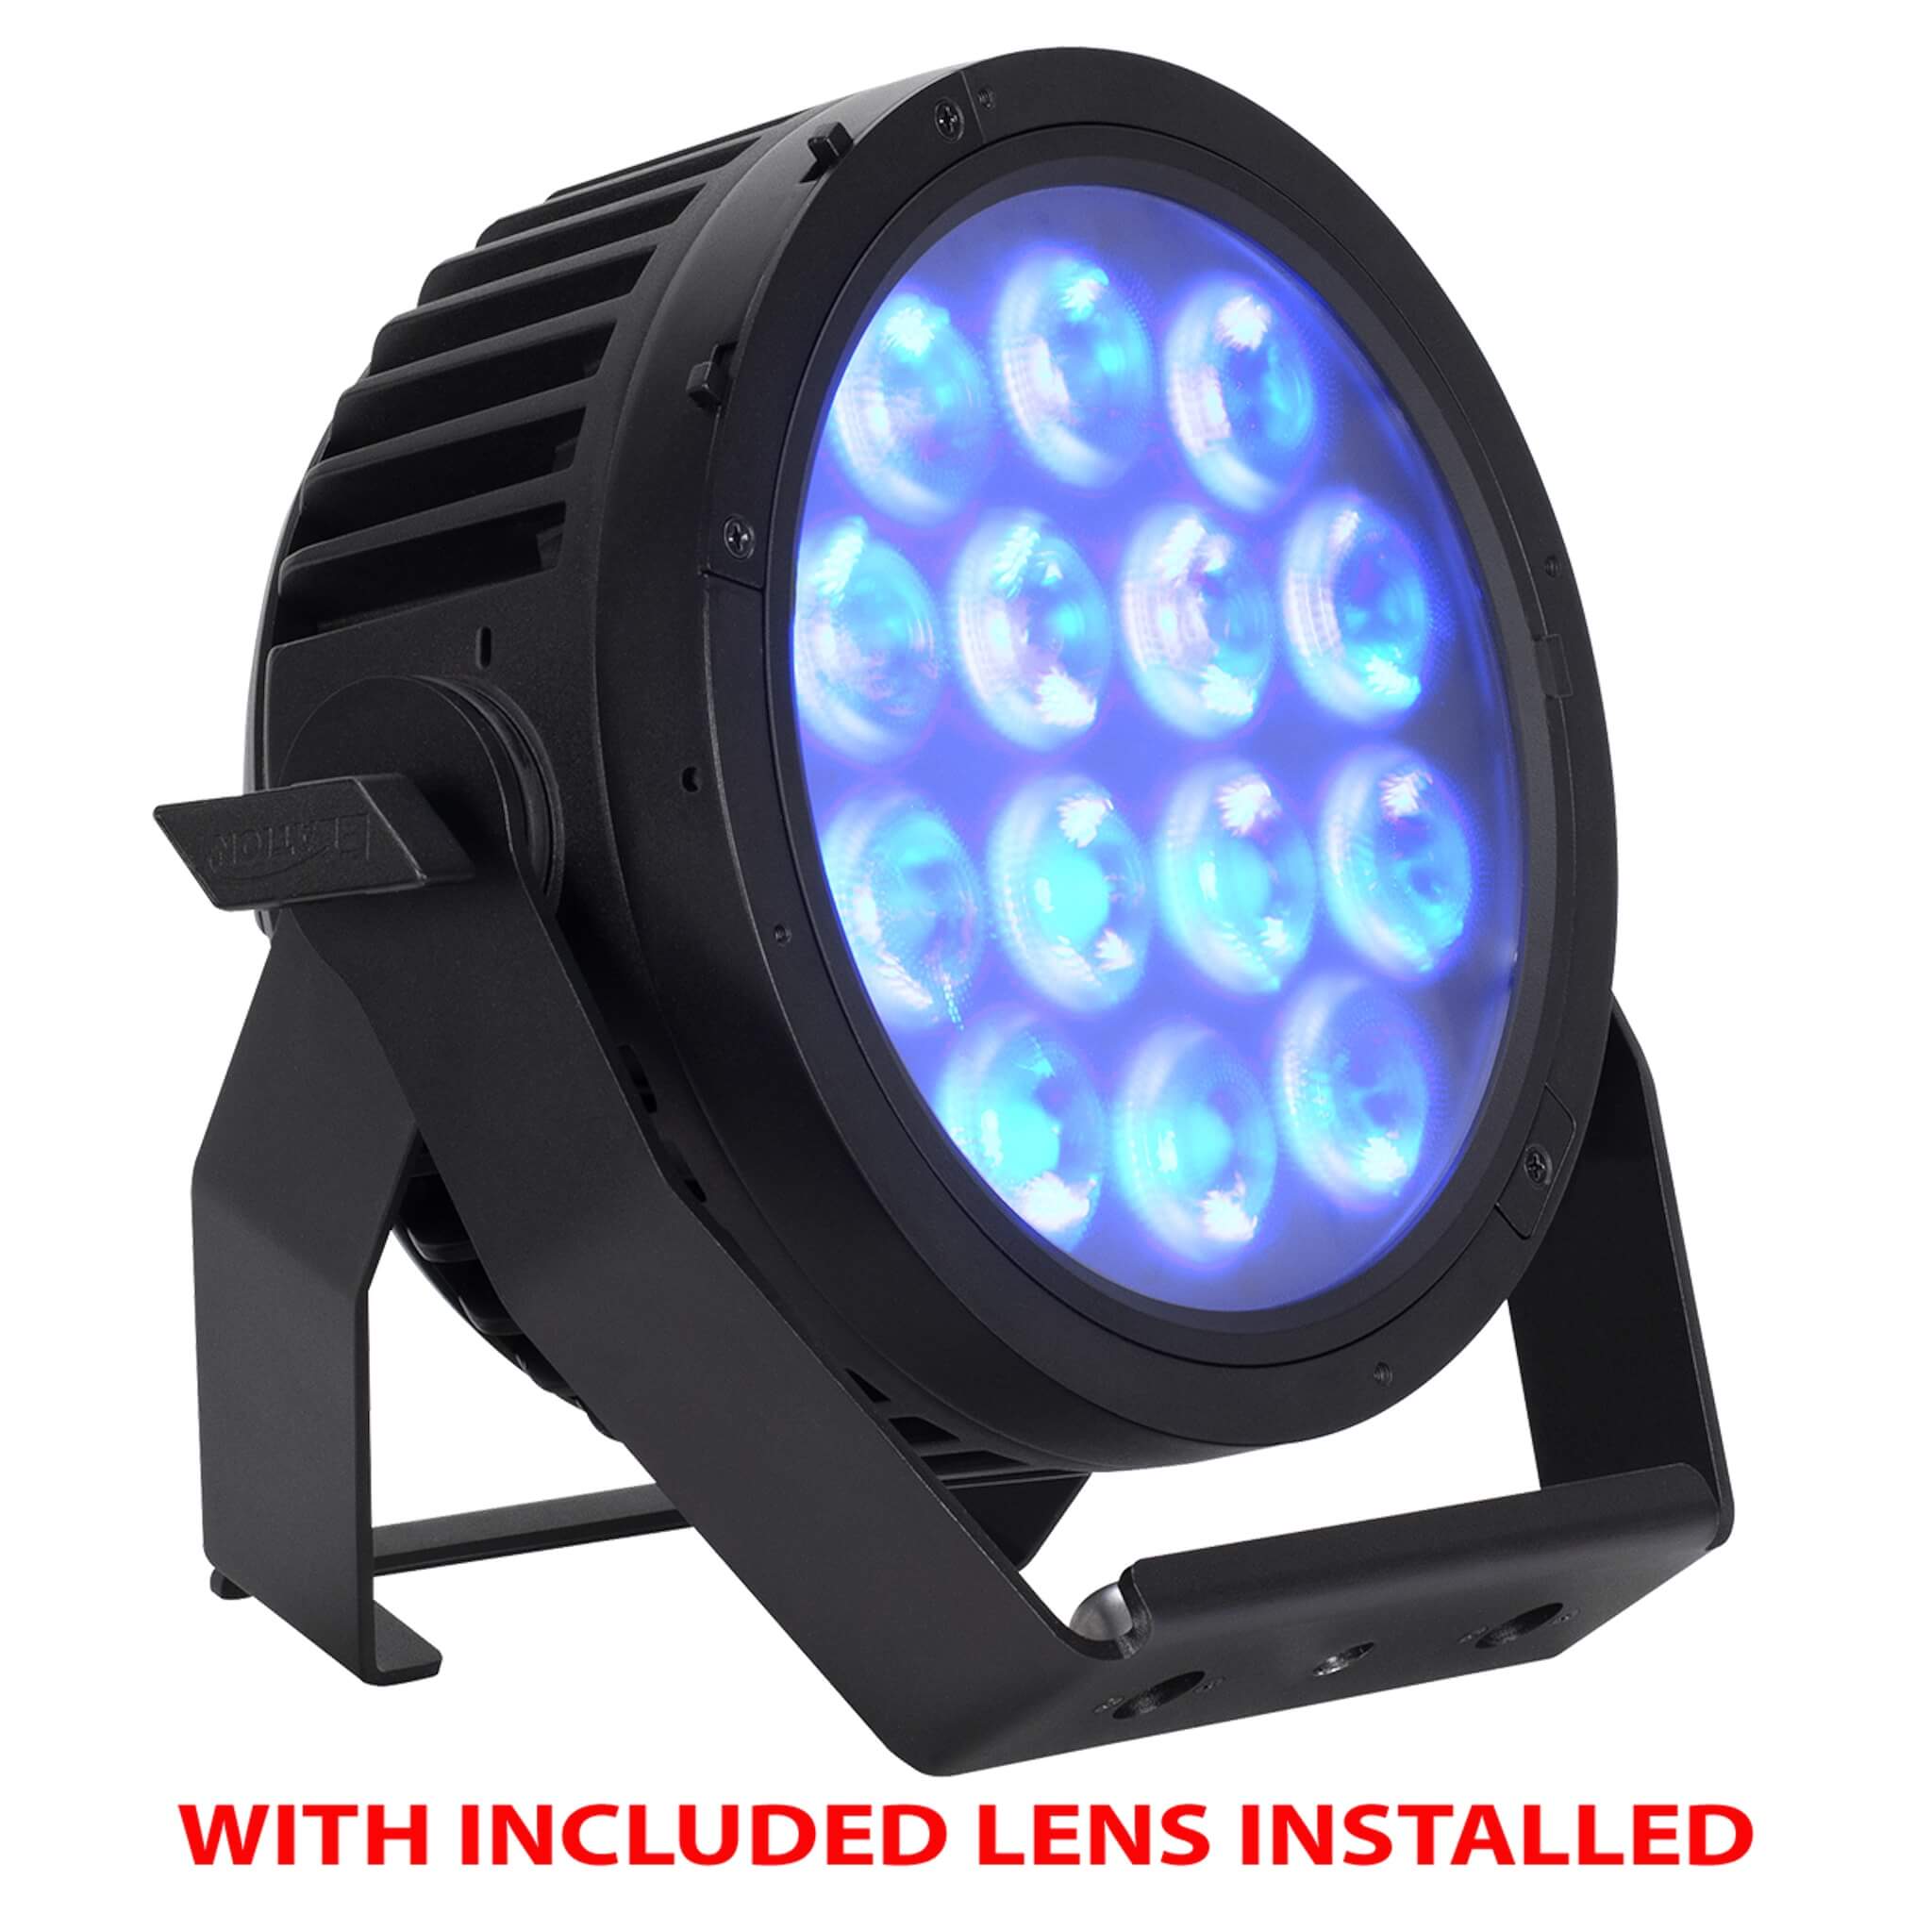 Elation SIX+ PAR L - RGBLA+UV LED Wash Par Fixture, with included diffusion lens installed